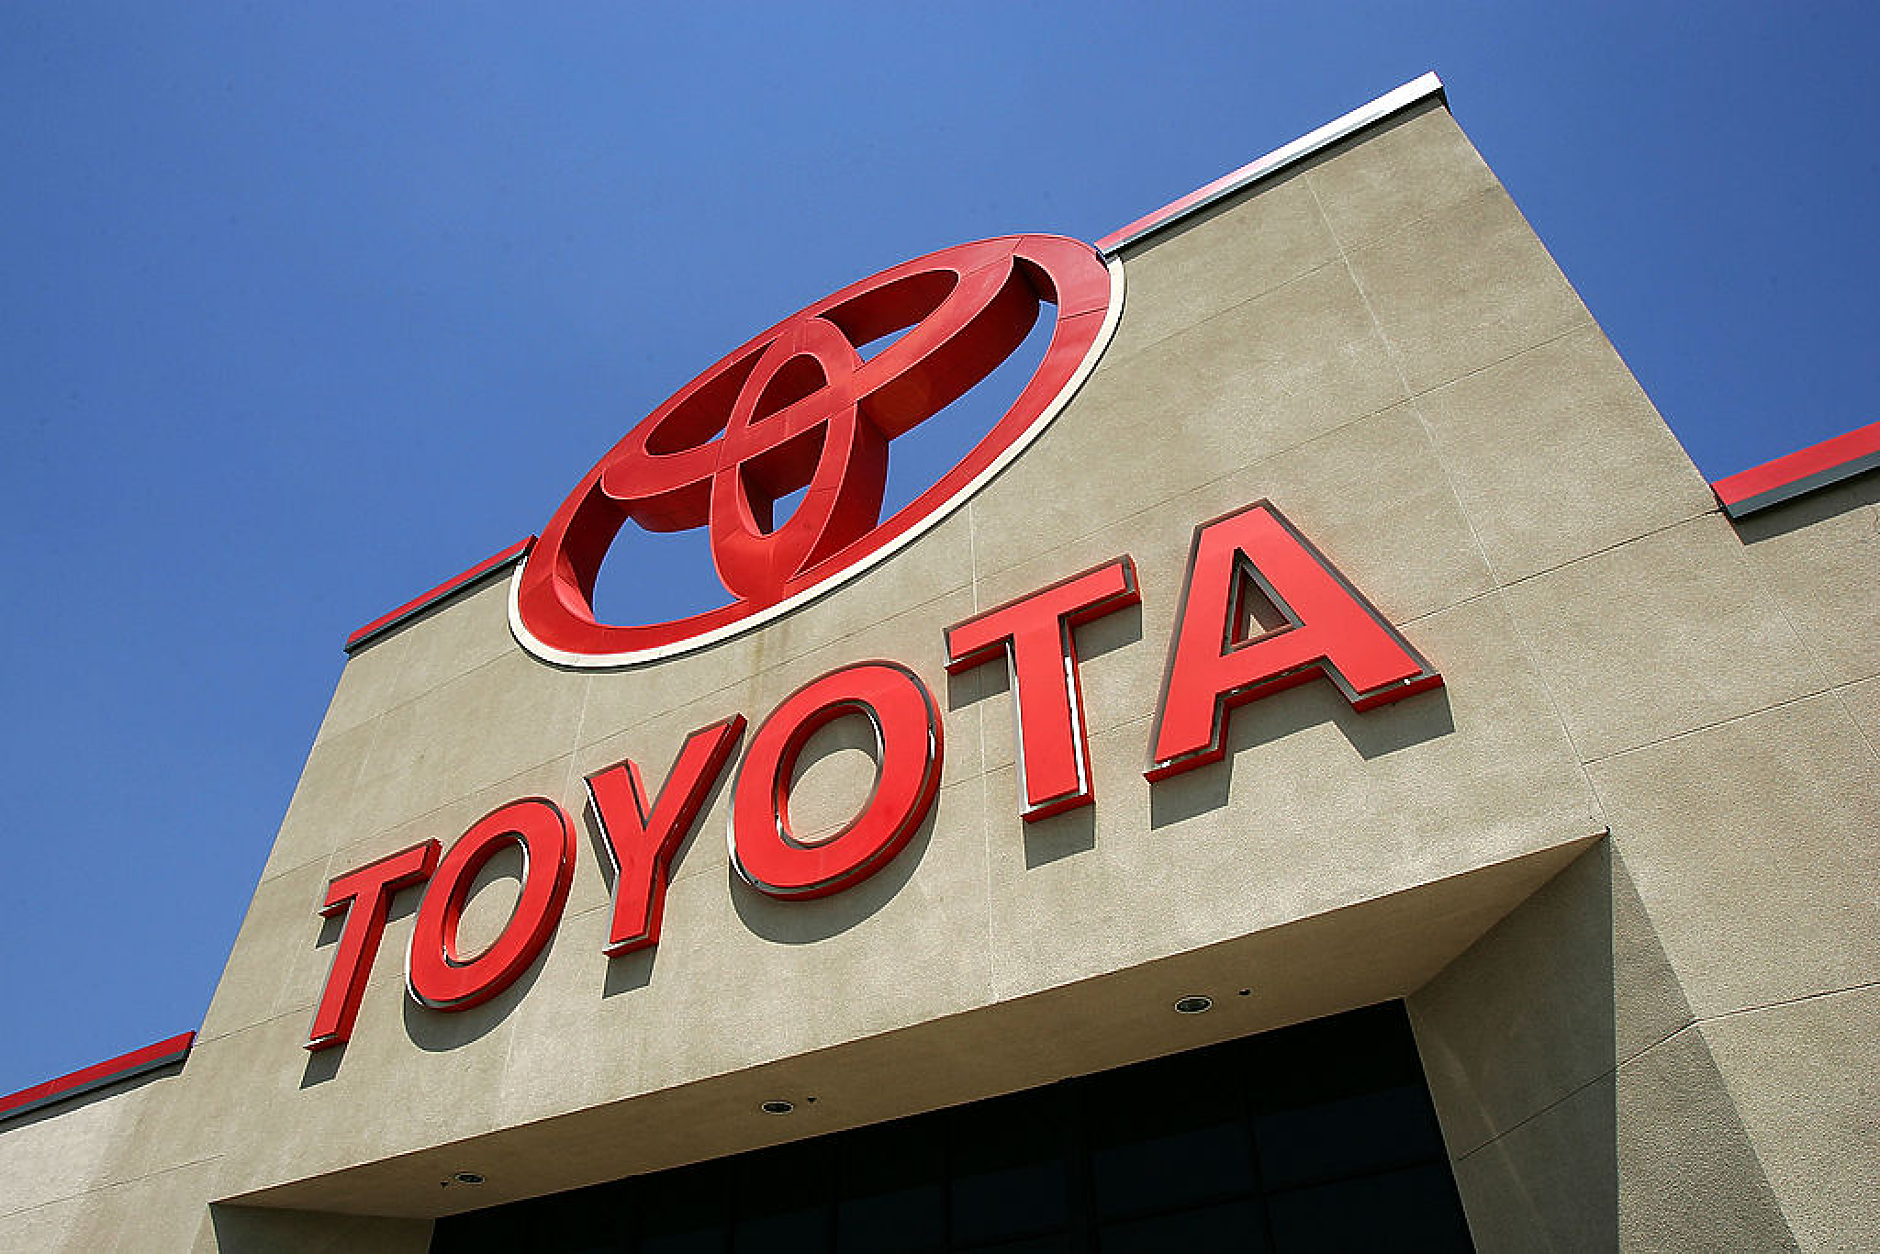 Toyota планира да повтори рекордното си годишно производство